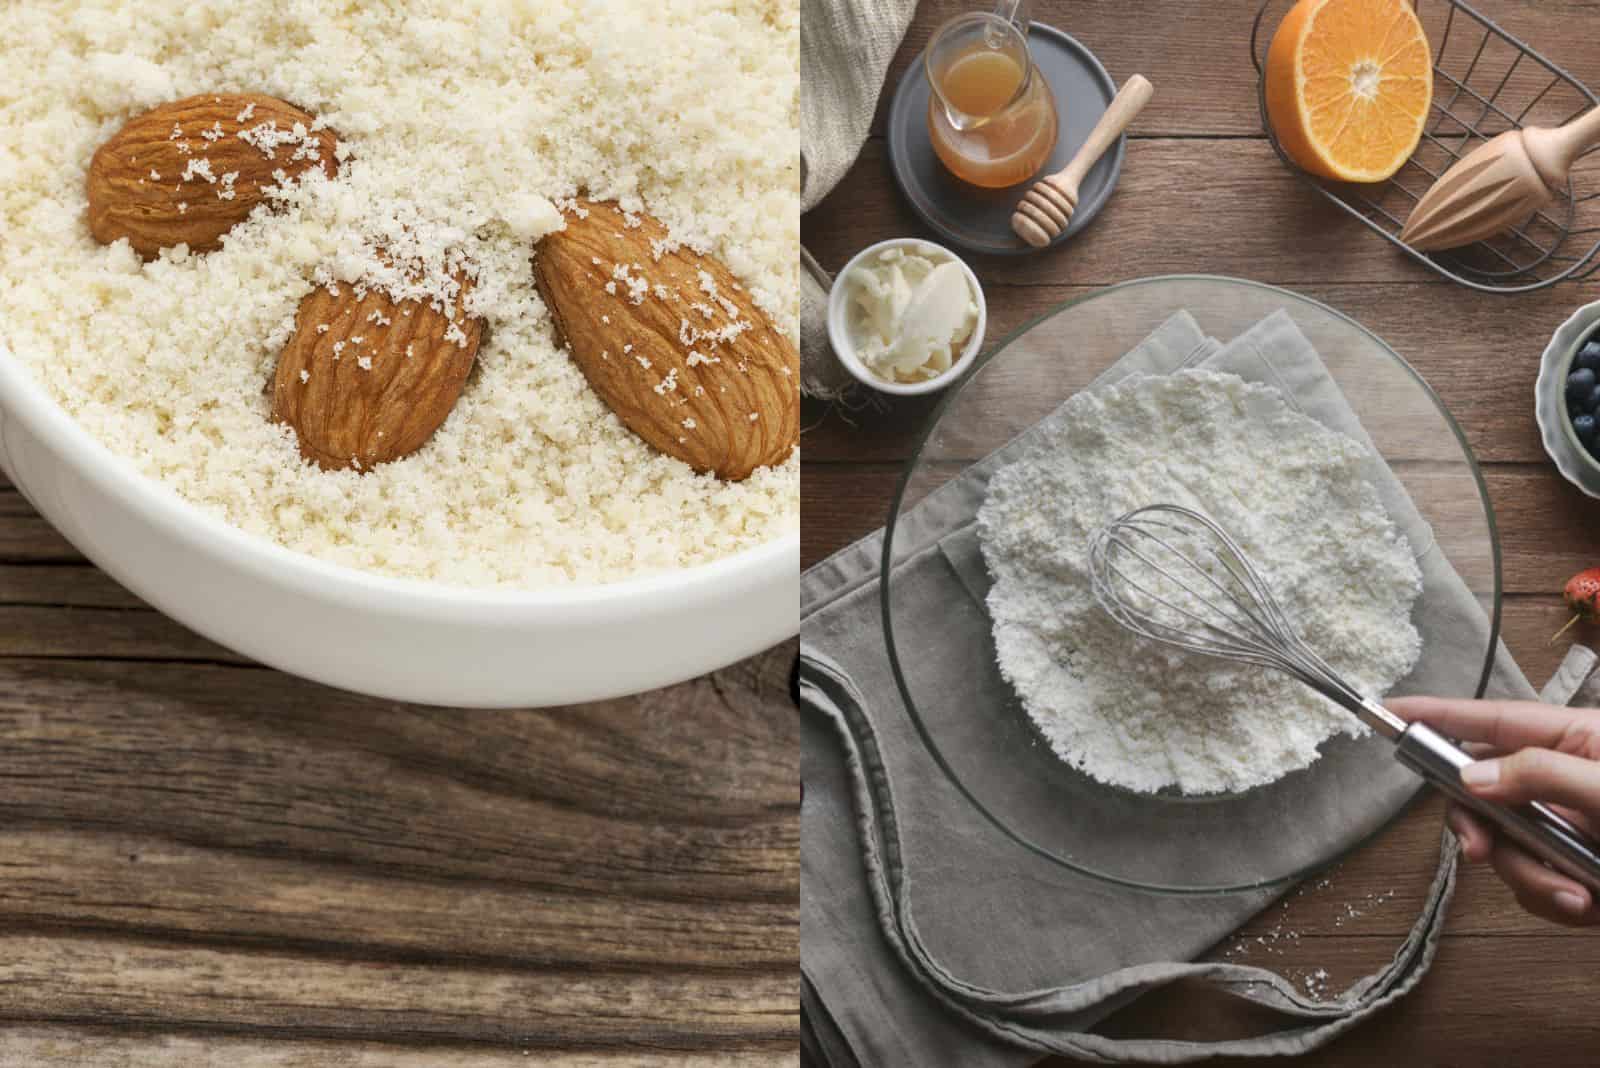 almond flour in a white bowl and plain flour